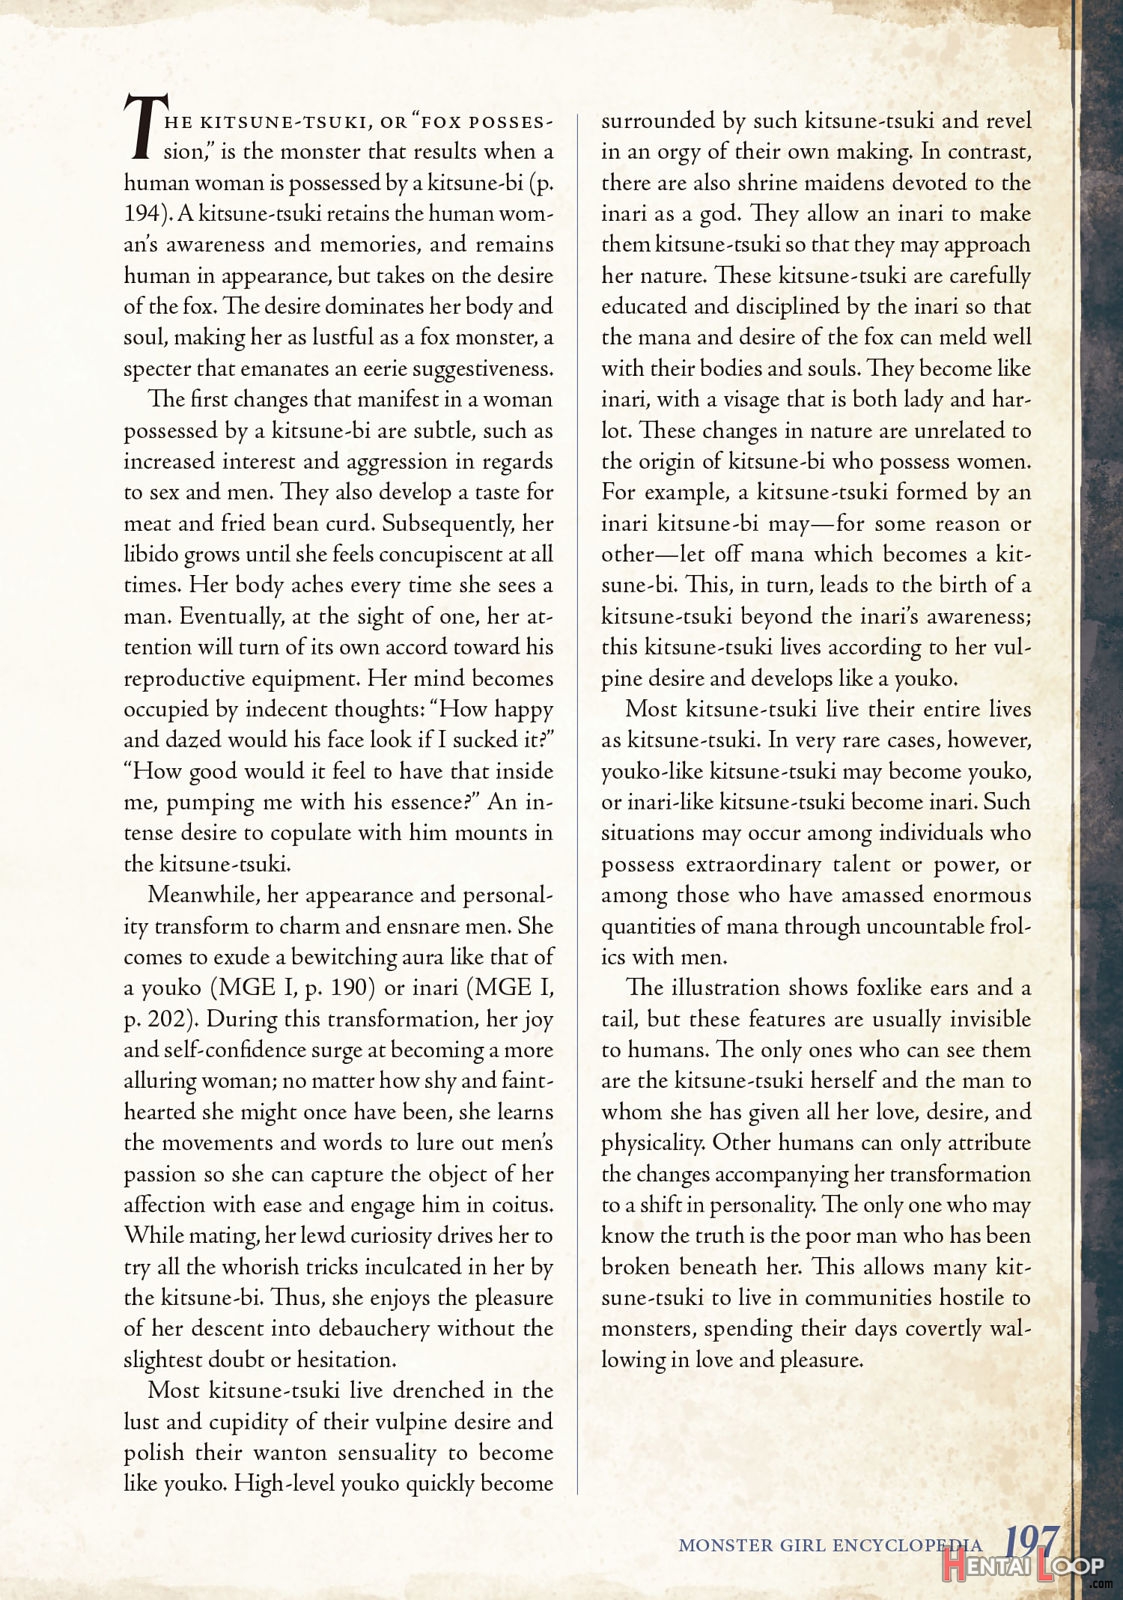 Monster Girl Encyclopedia Vol. 2 page 198